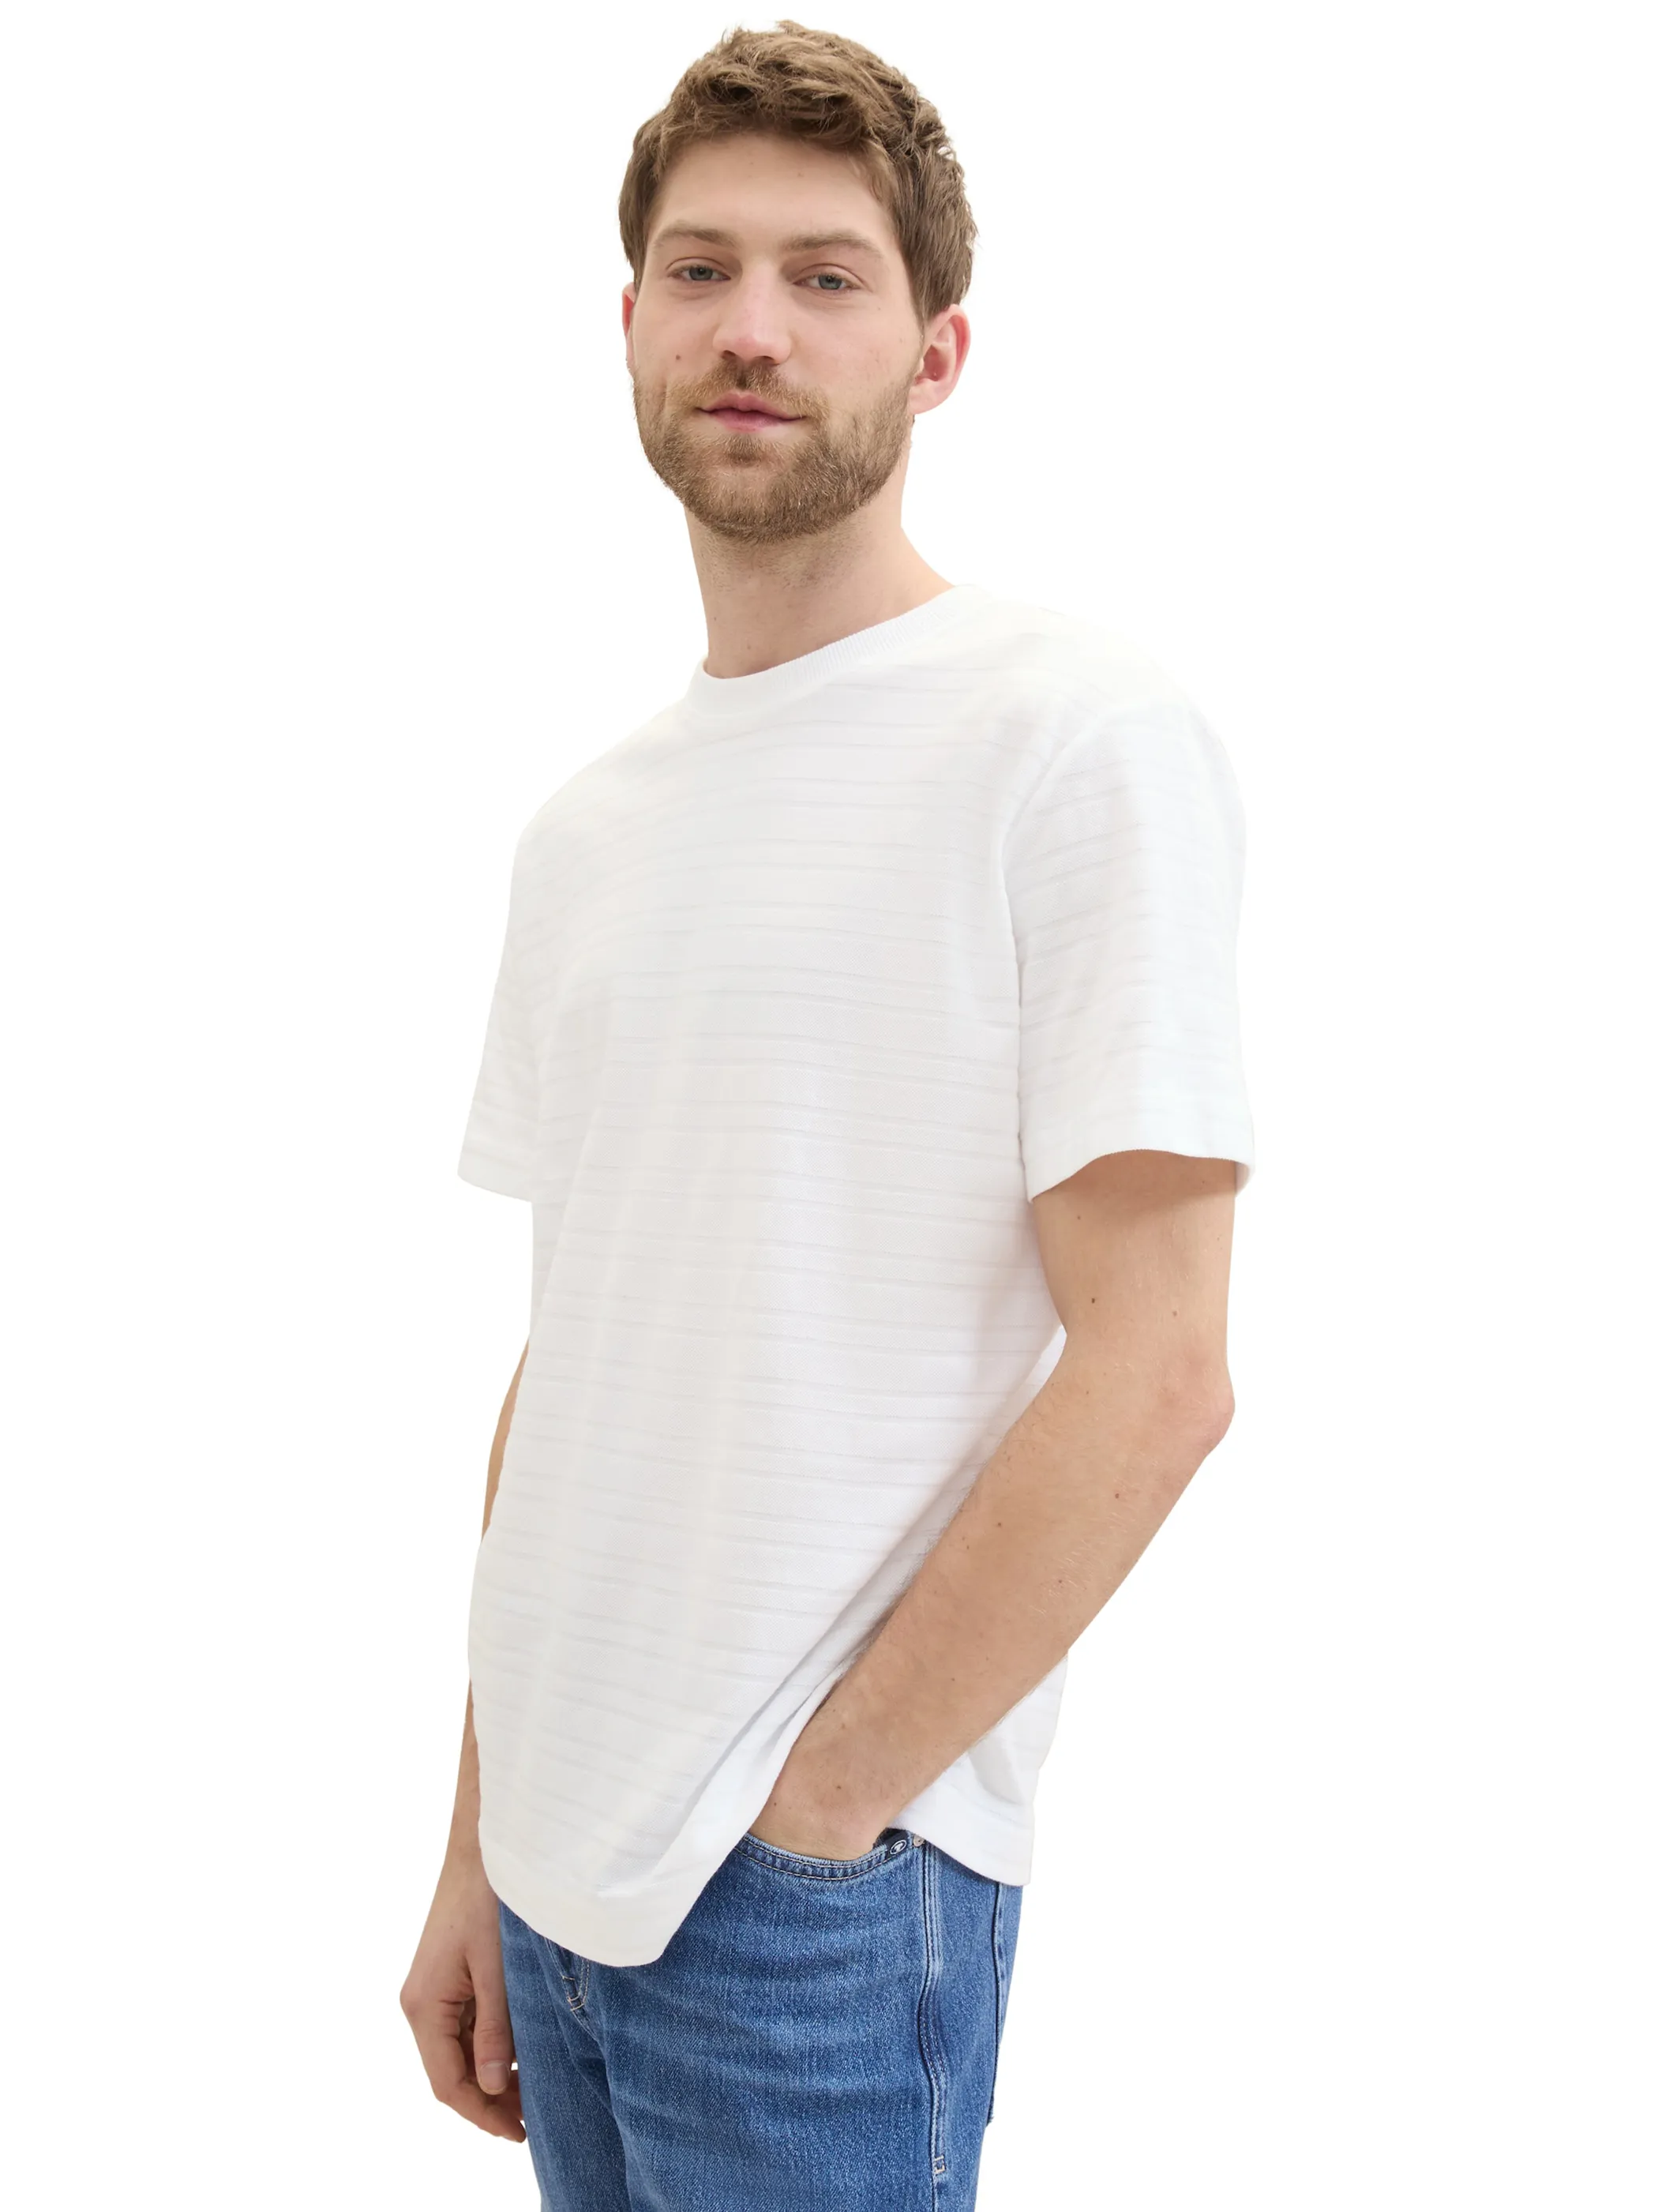 Tom Tailor 1042131 structured t-shirt Weiß 895628 20000 5